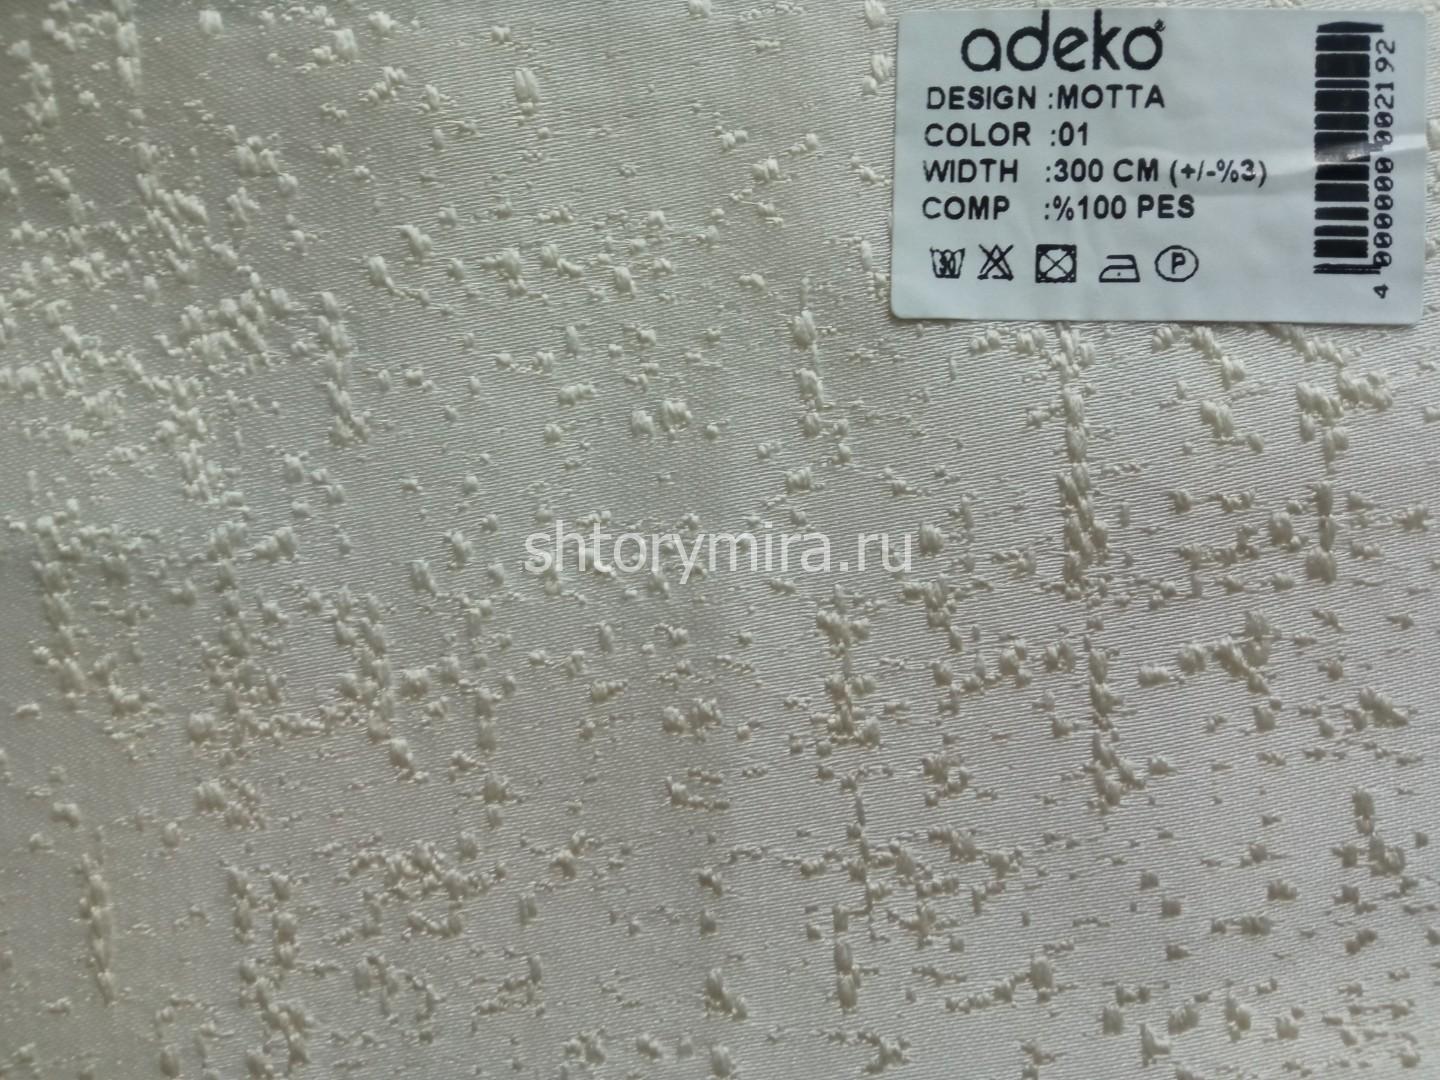 Ткань Motta-01 Adeko